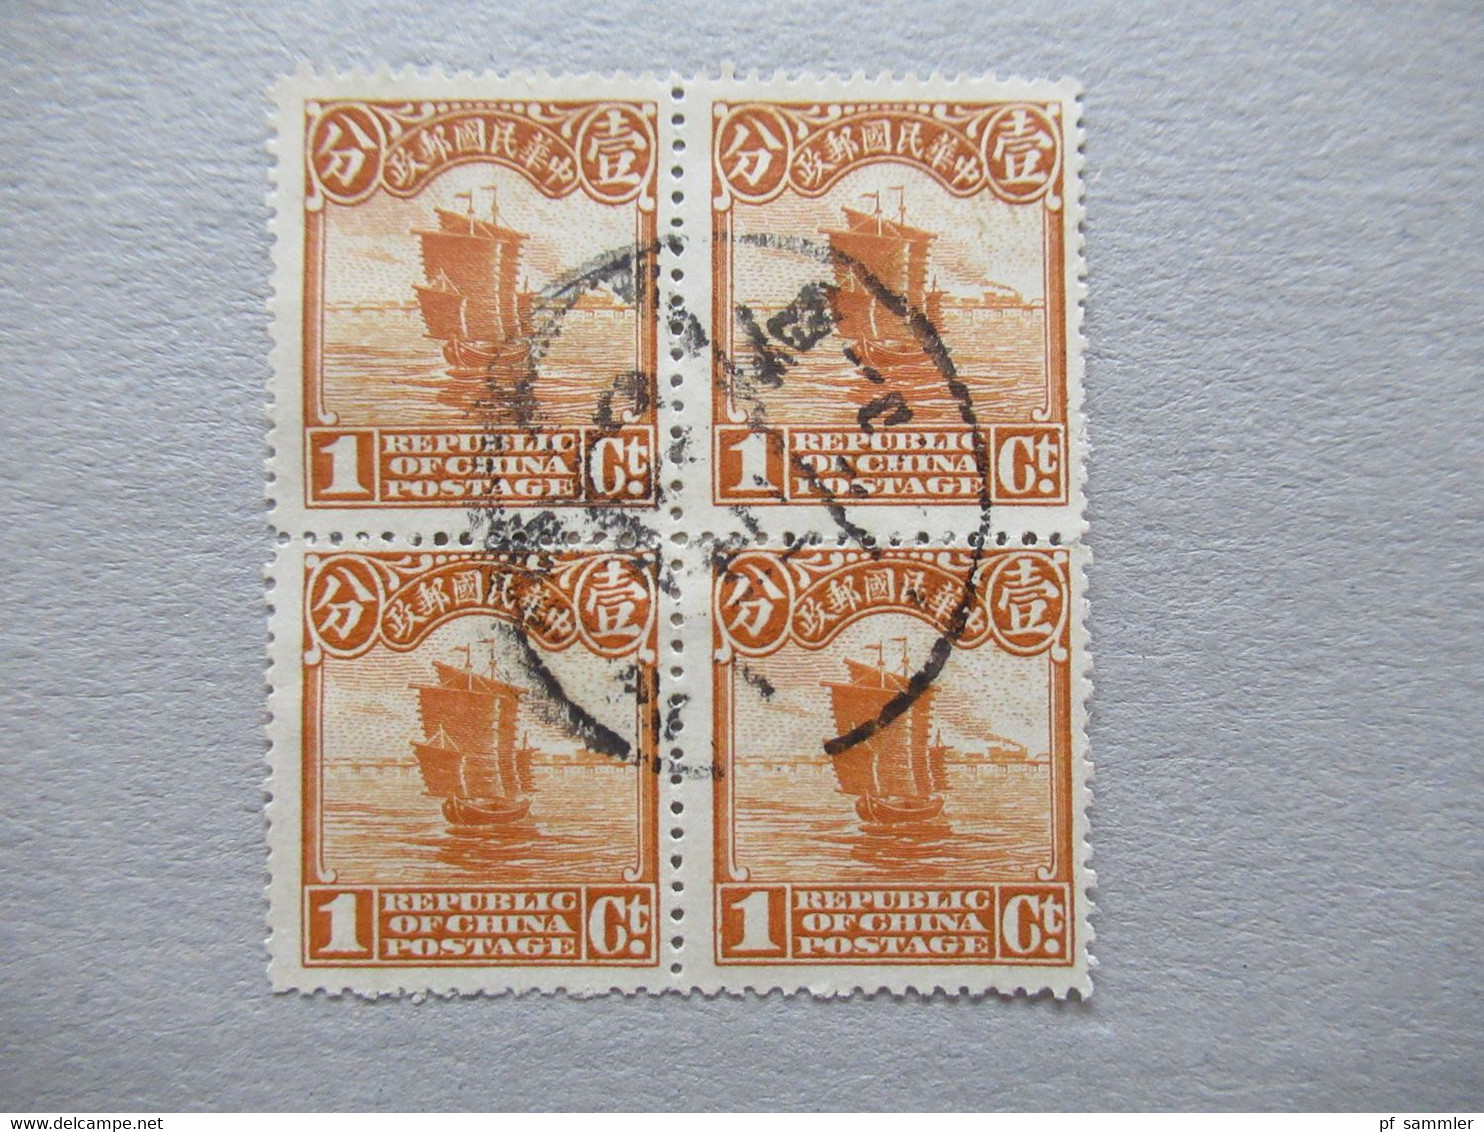 Asien China Volksrepublik Dschunke 1 Cent Im 4er Block / Gestempel 1920er Jahre - 1912-1949 Republic